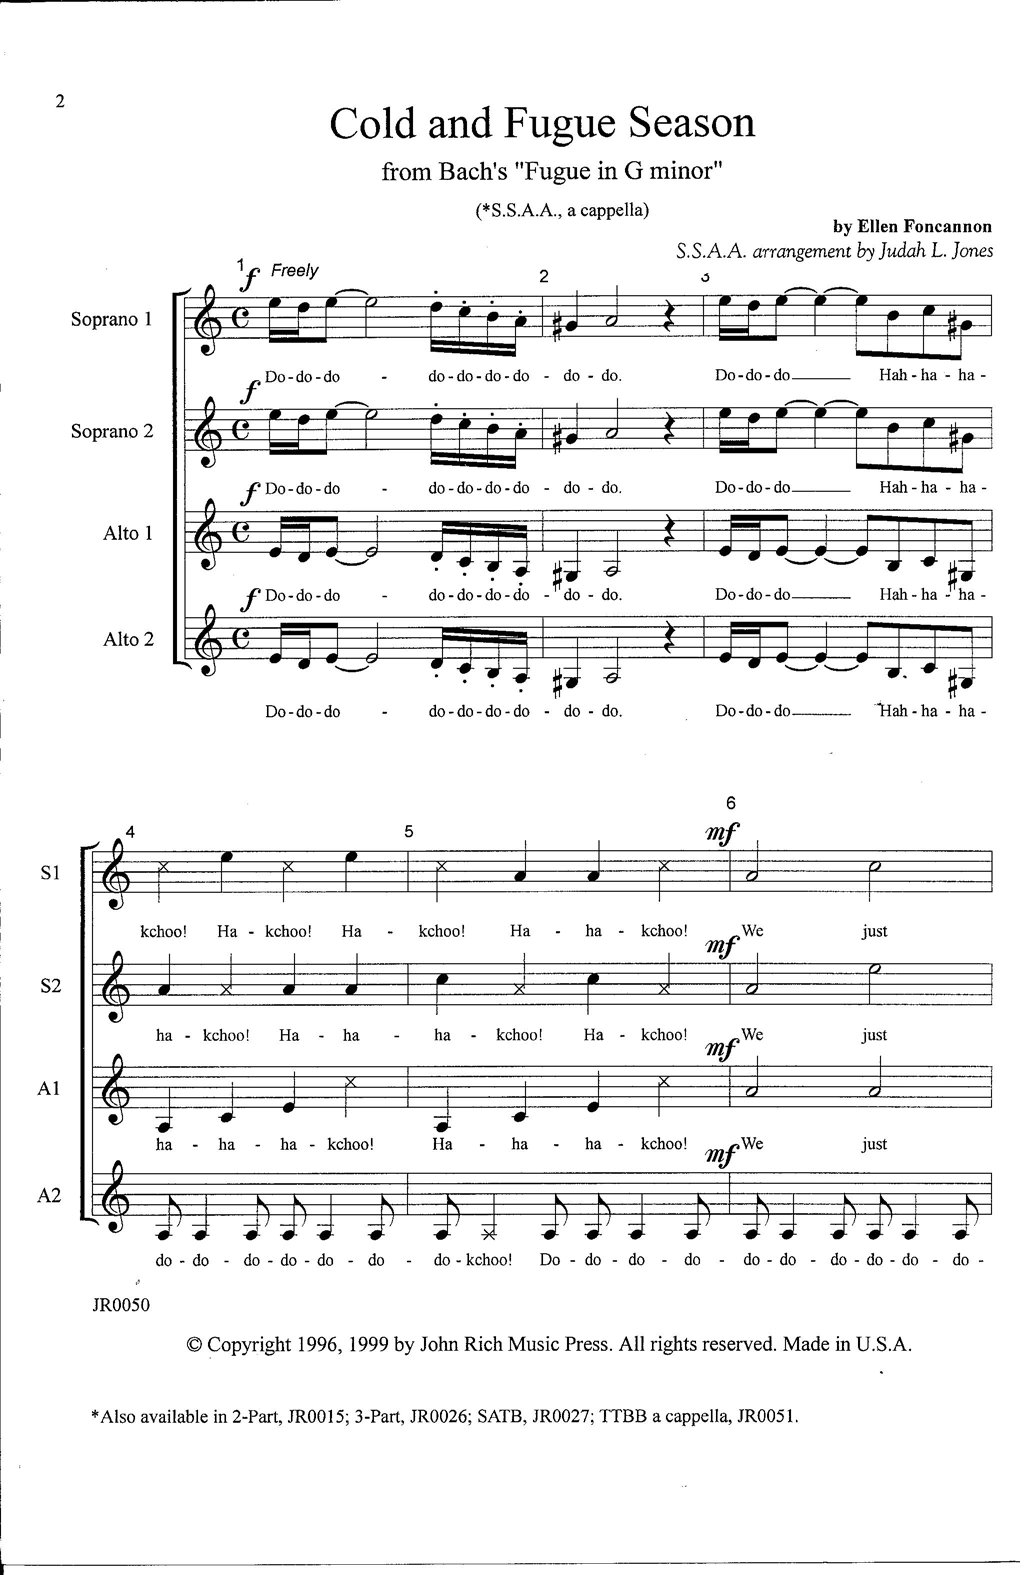 J.S. Bach Cold and Fugue Season (arr. Ellen Foncannon) Sheet Music Notes & Chords for 3-Part Mixed Choir - Download or Print PDF